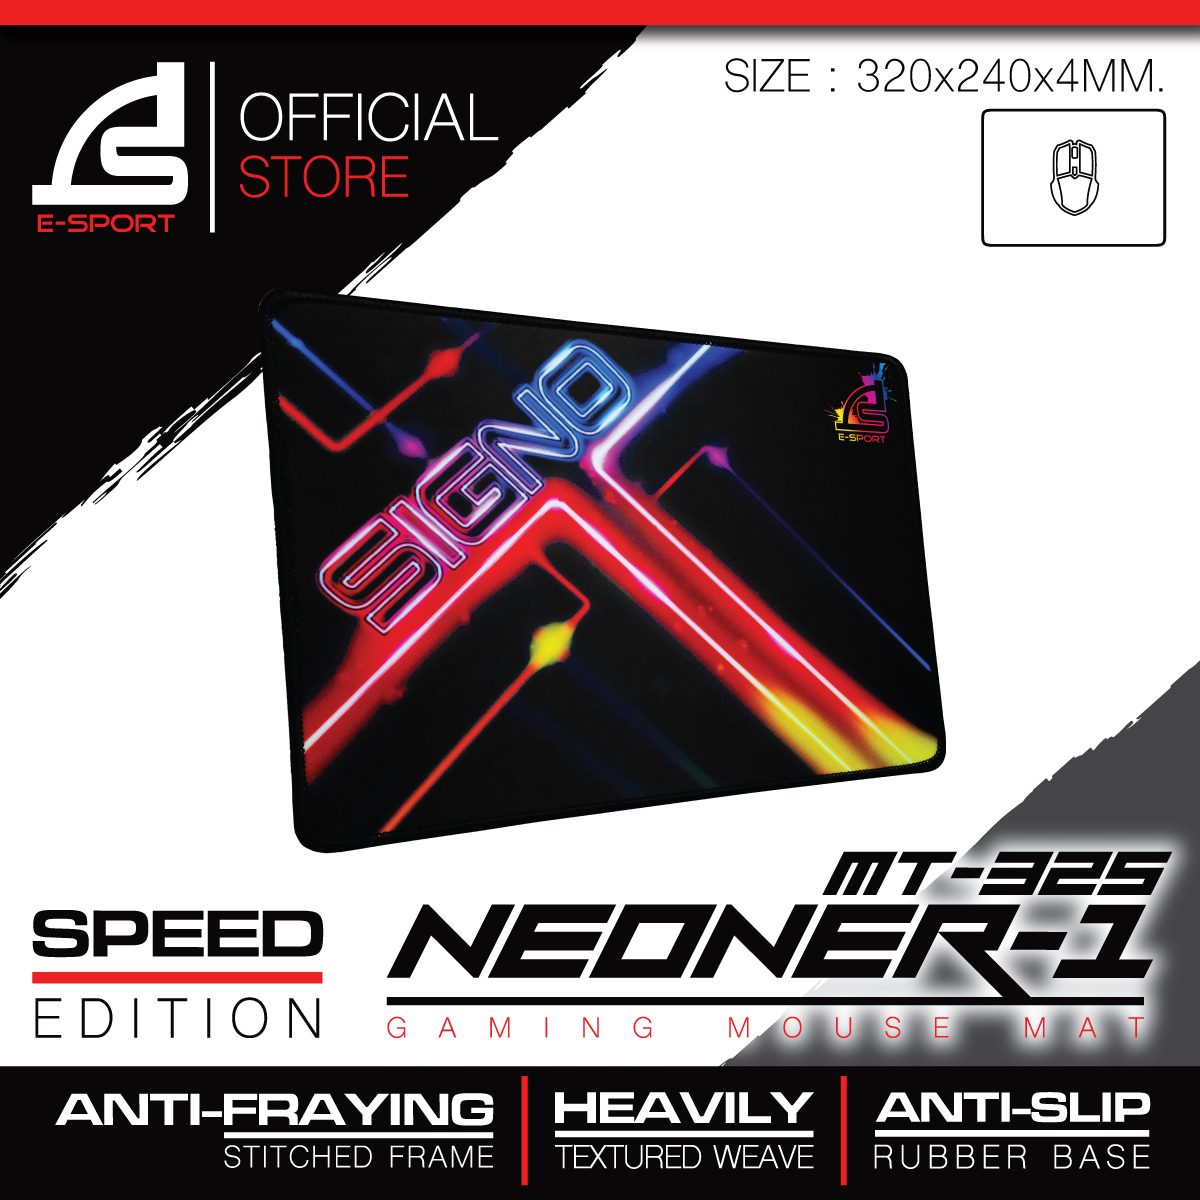 Signo E-Sport NEONER-1 Gaming Mouse Mat รุ่น MT-325 (Speed Edition) (แผ่นรองเมาส์ เกมส์มิ่ง)